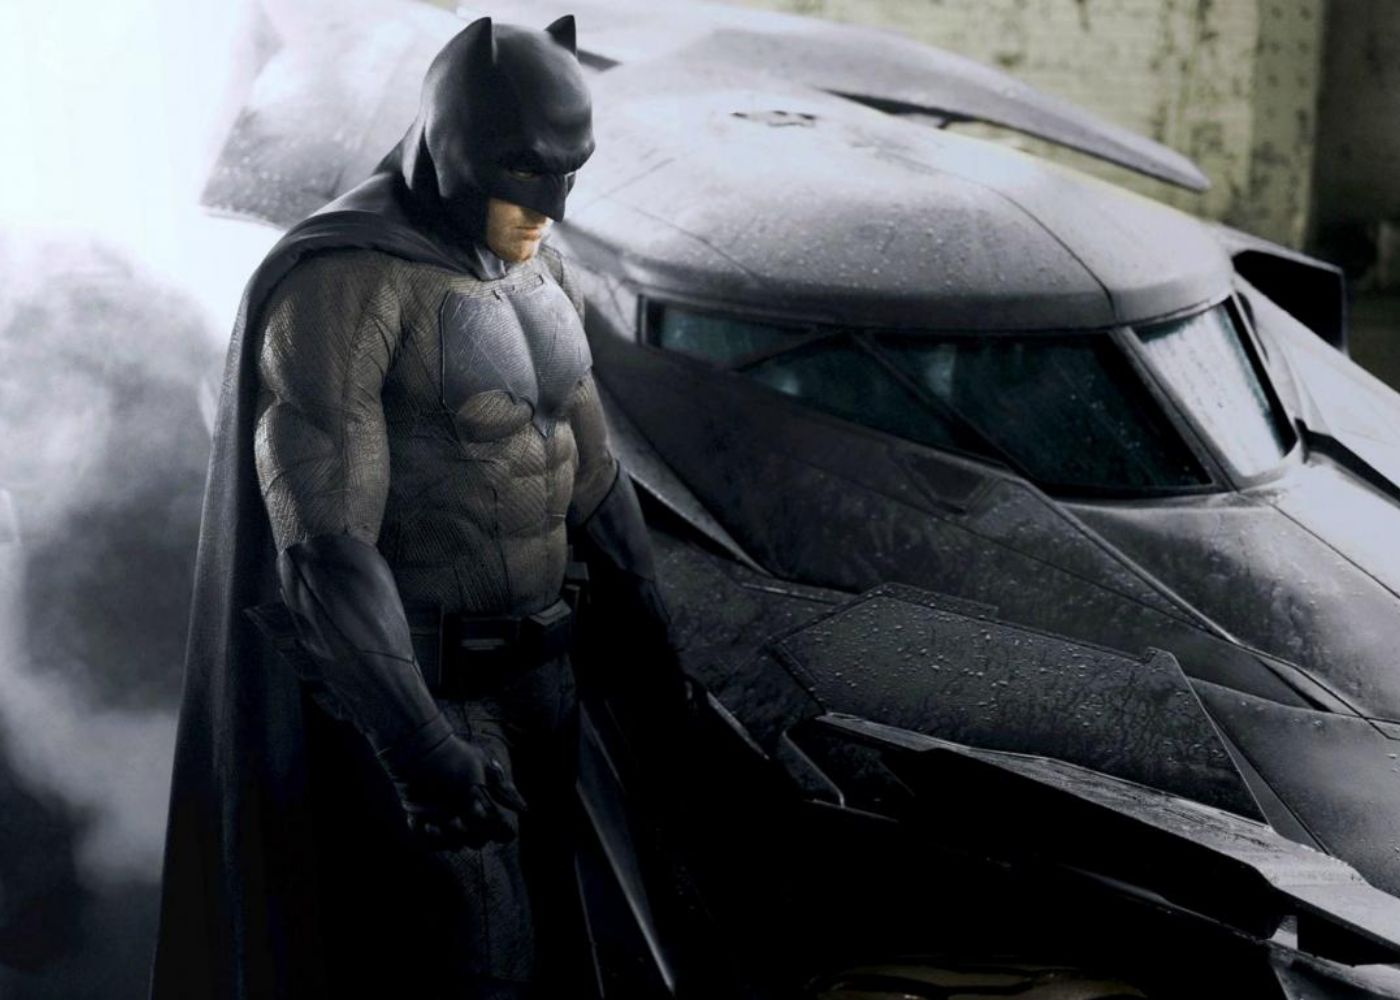 Affleck Hints at ‘Heroic’ Batman in Justice League